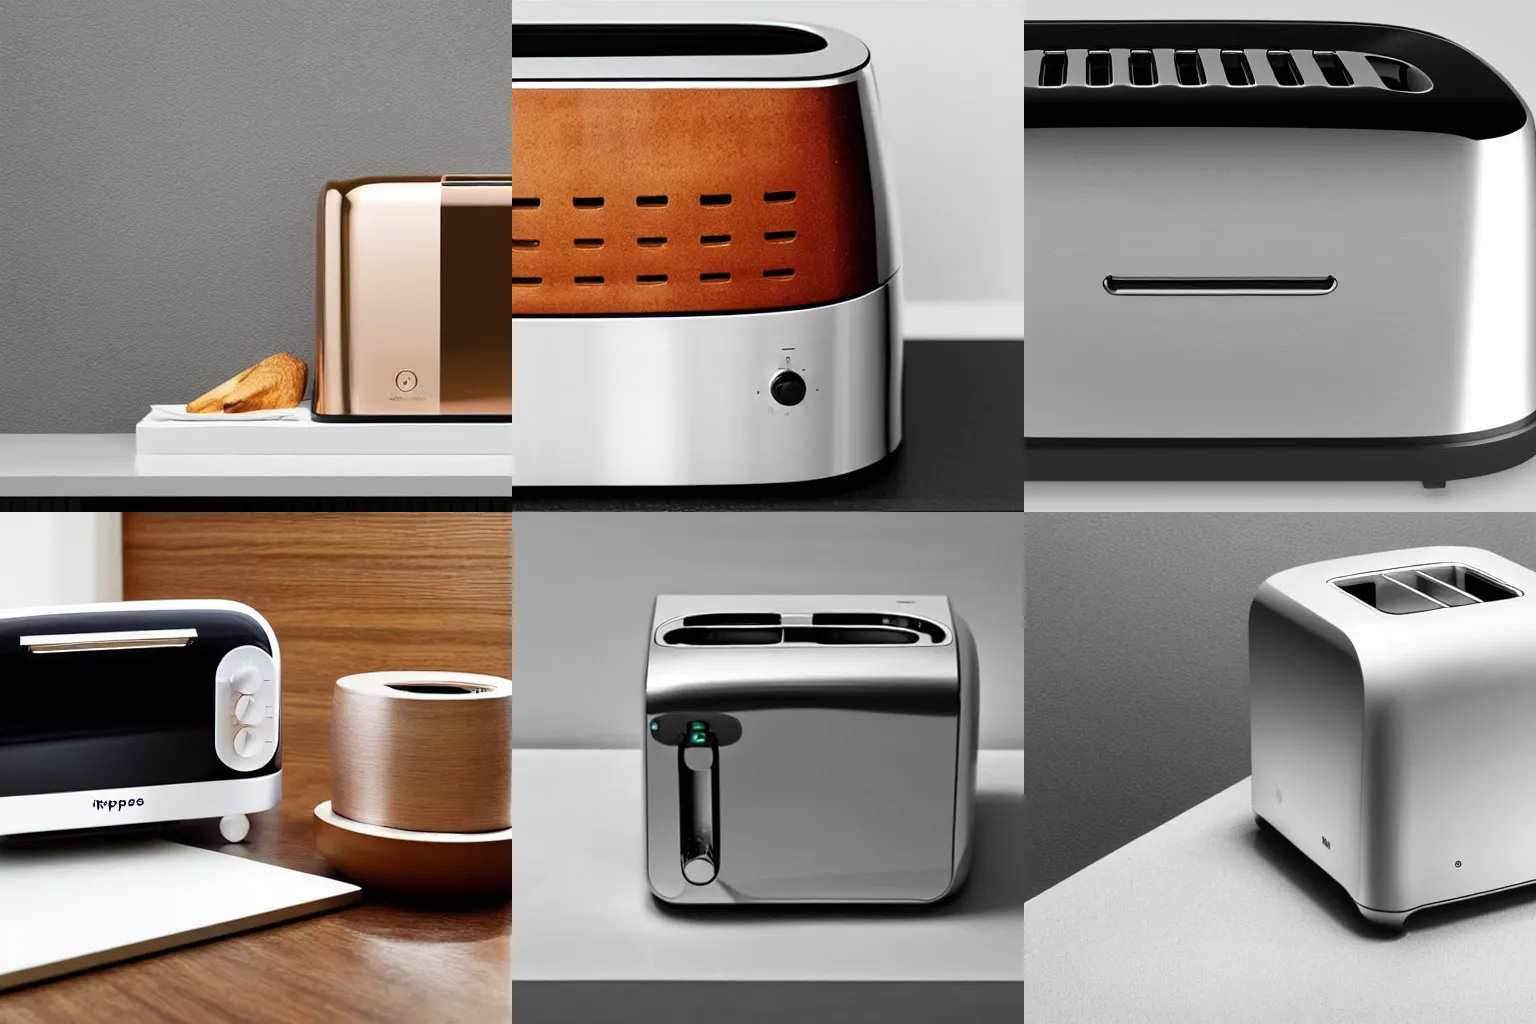 Prompt: toaster designed by Apple, product design, elegant, beautiful, ergonomic